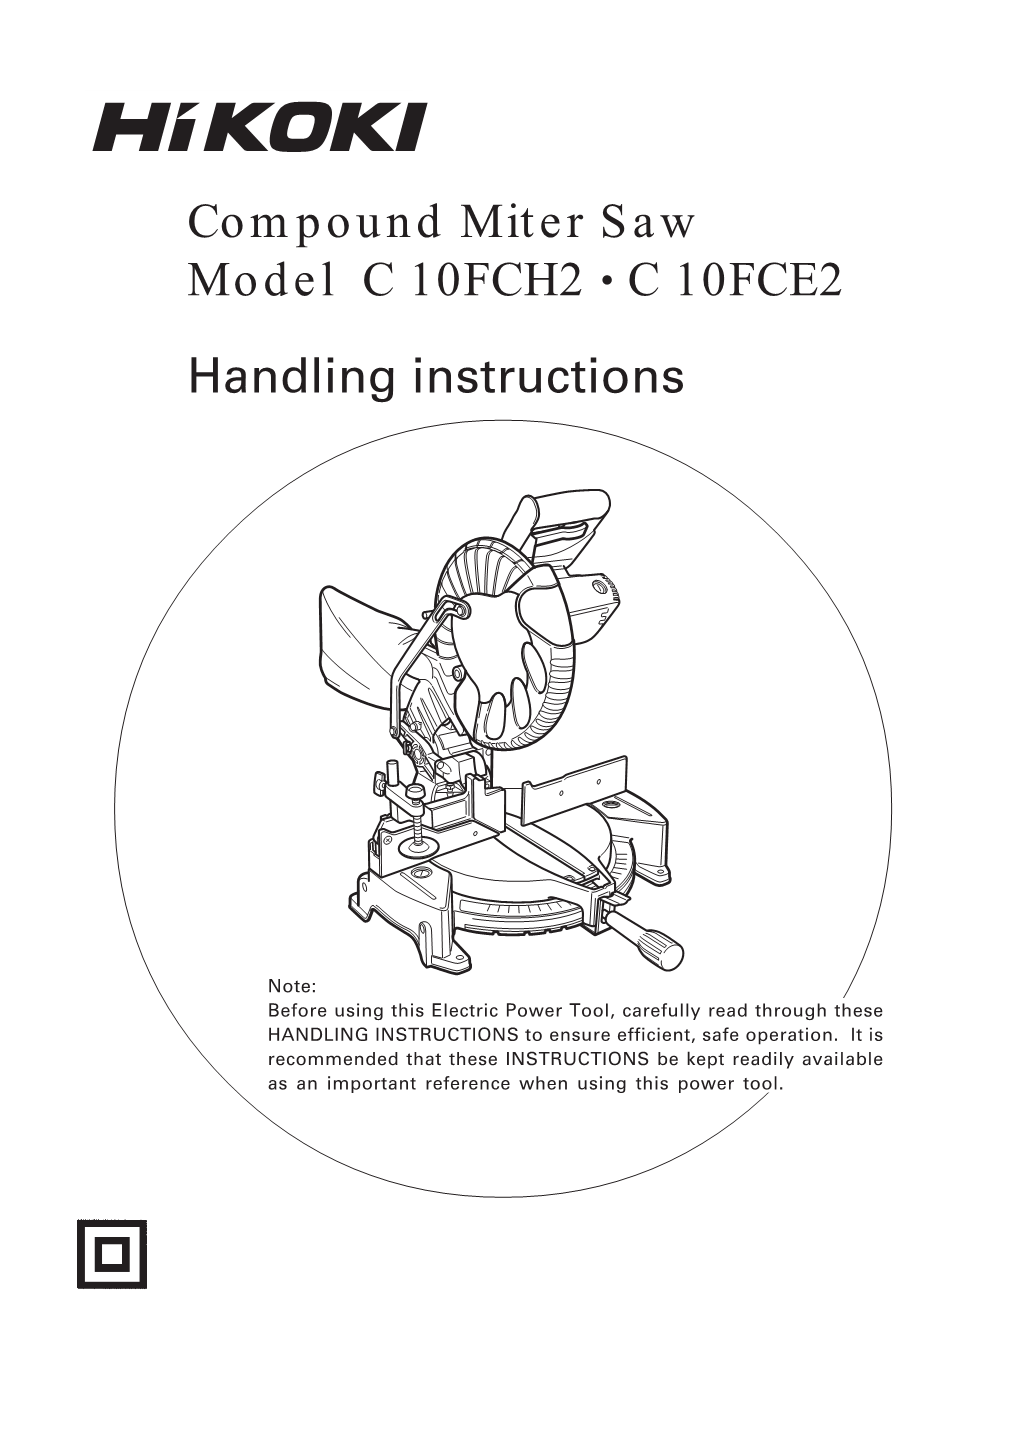 Compound Miter Saw Model C 10FCH2 • C 10FCE2 Handling Instructions